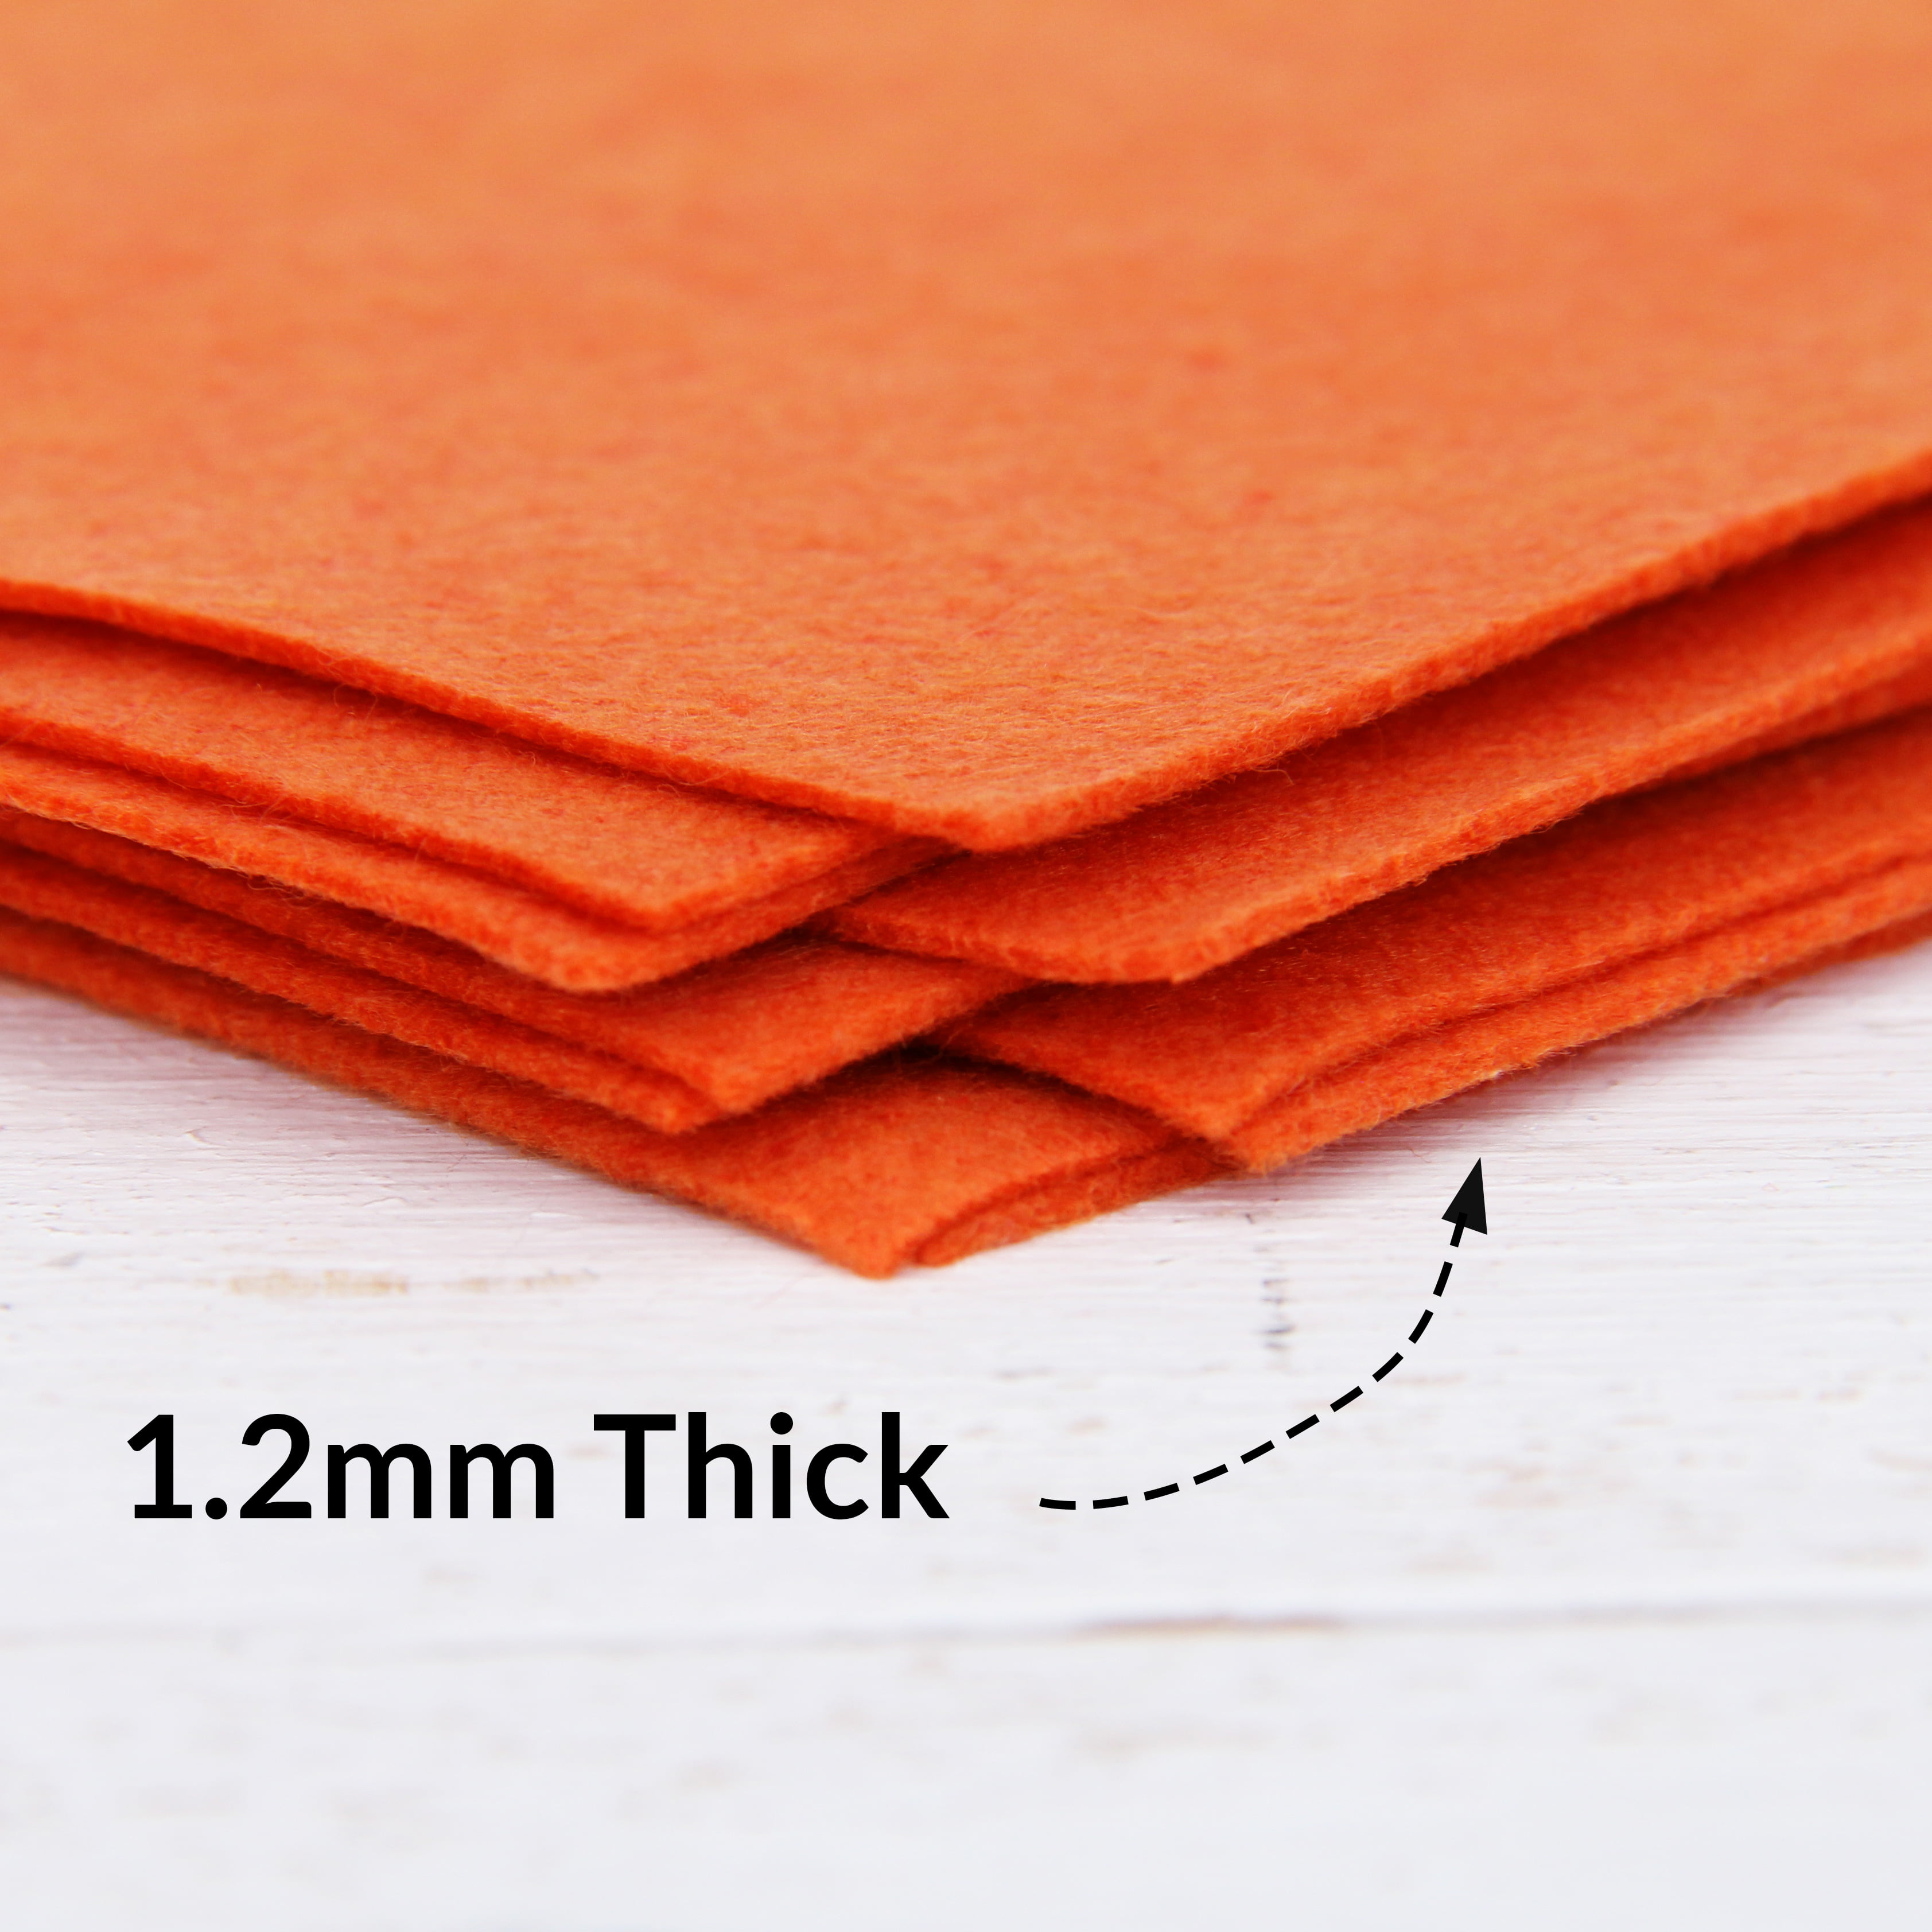 Orange Felt Fabric